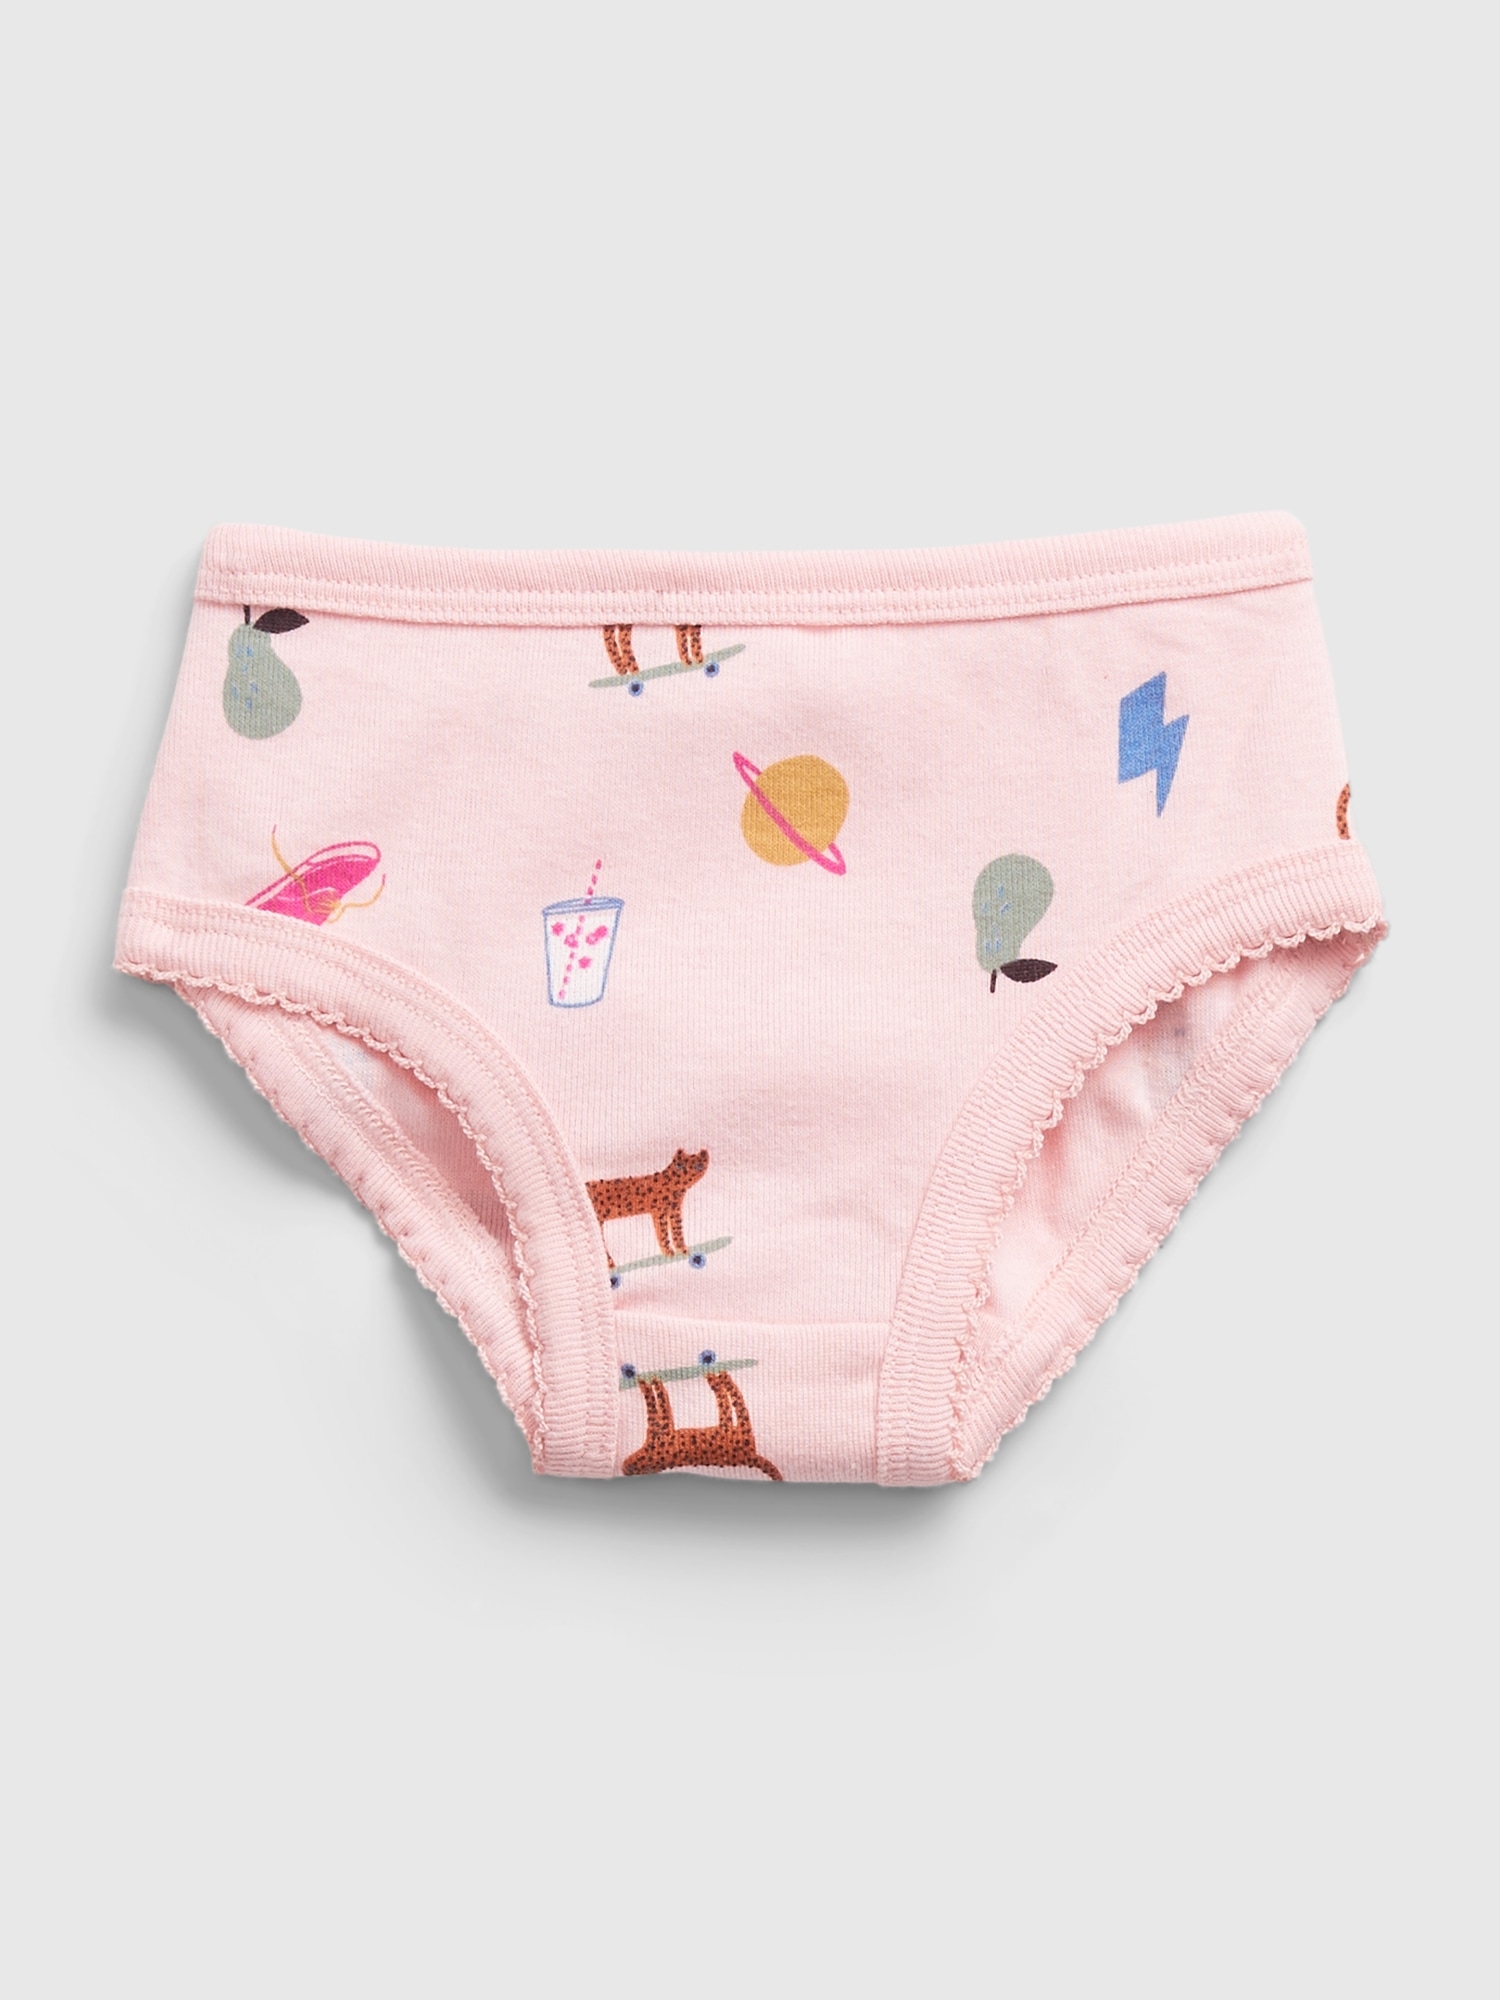 Girls' 10pk Cotton Bikini Underwear - Cat & Jack™ 4